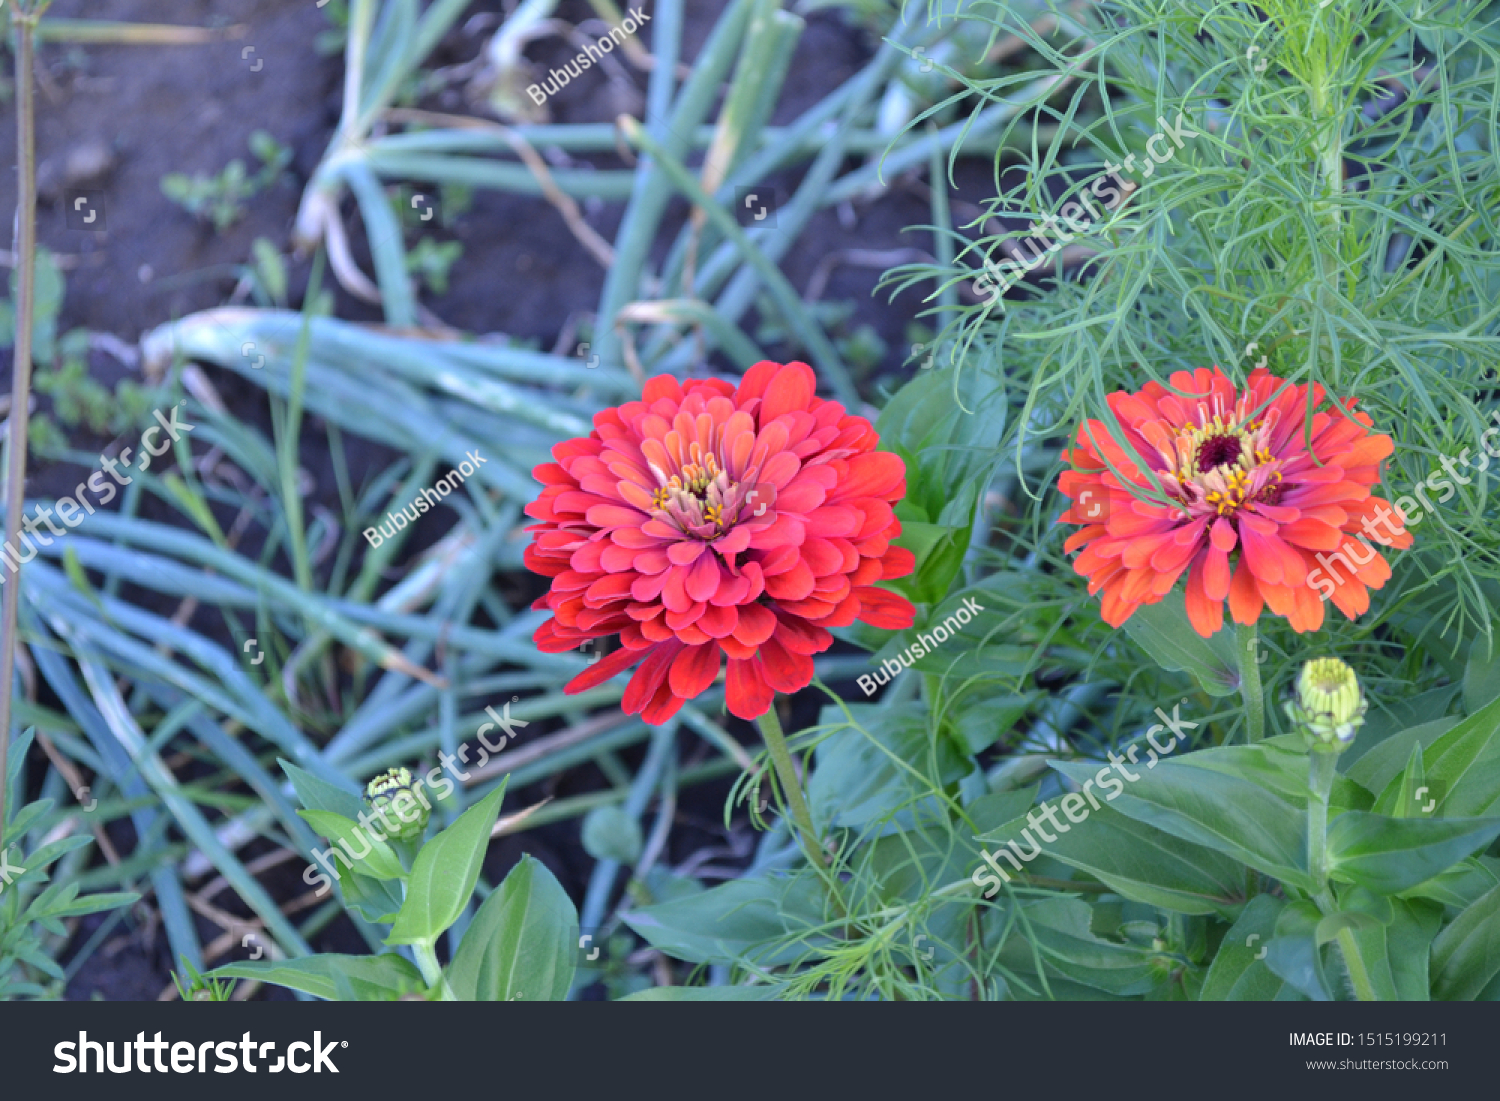 Flower Zinnia Gardening Home Garden Bed Stock Photo Edit Now 1515199211